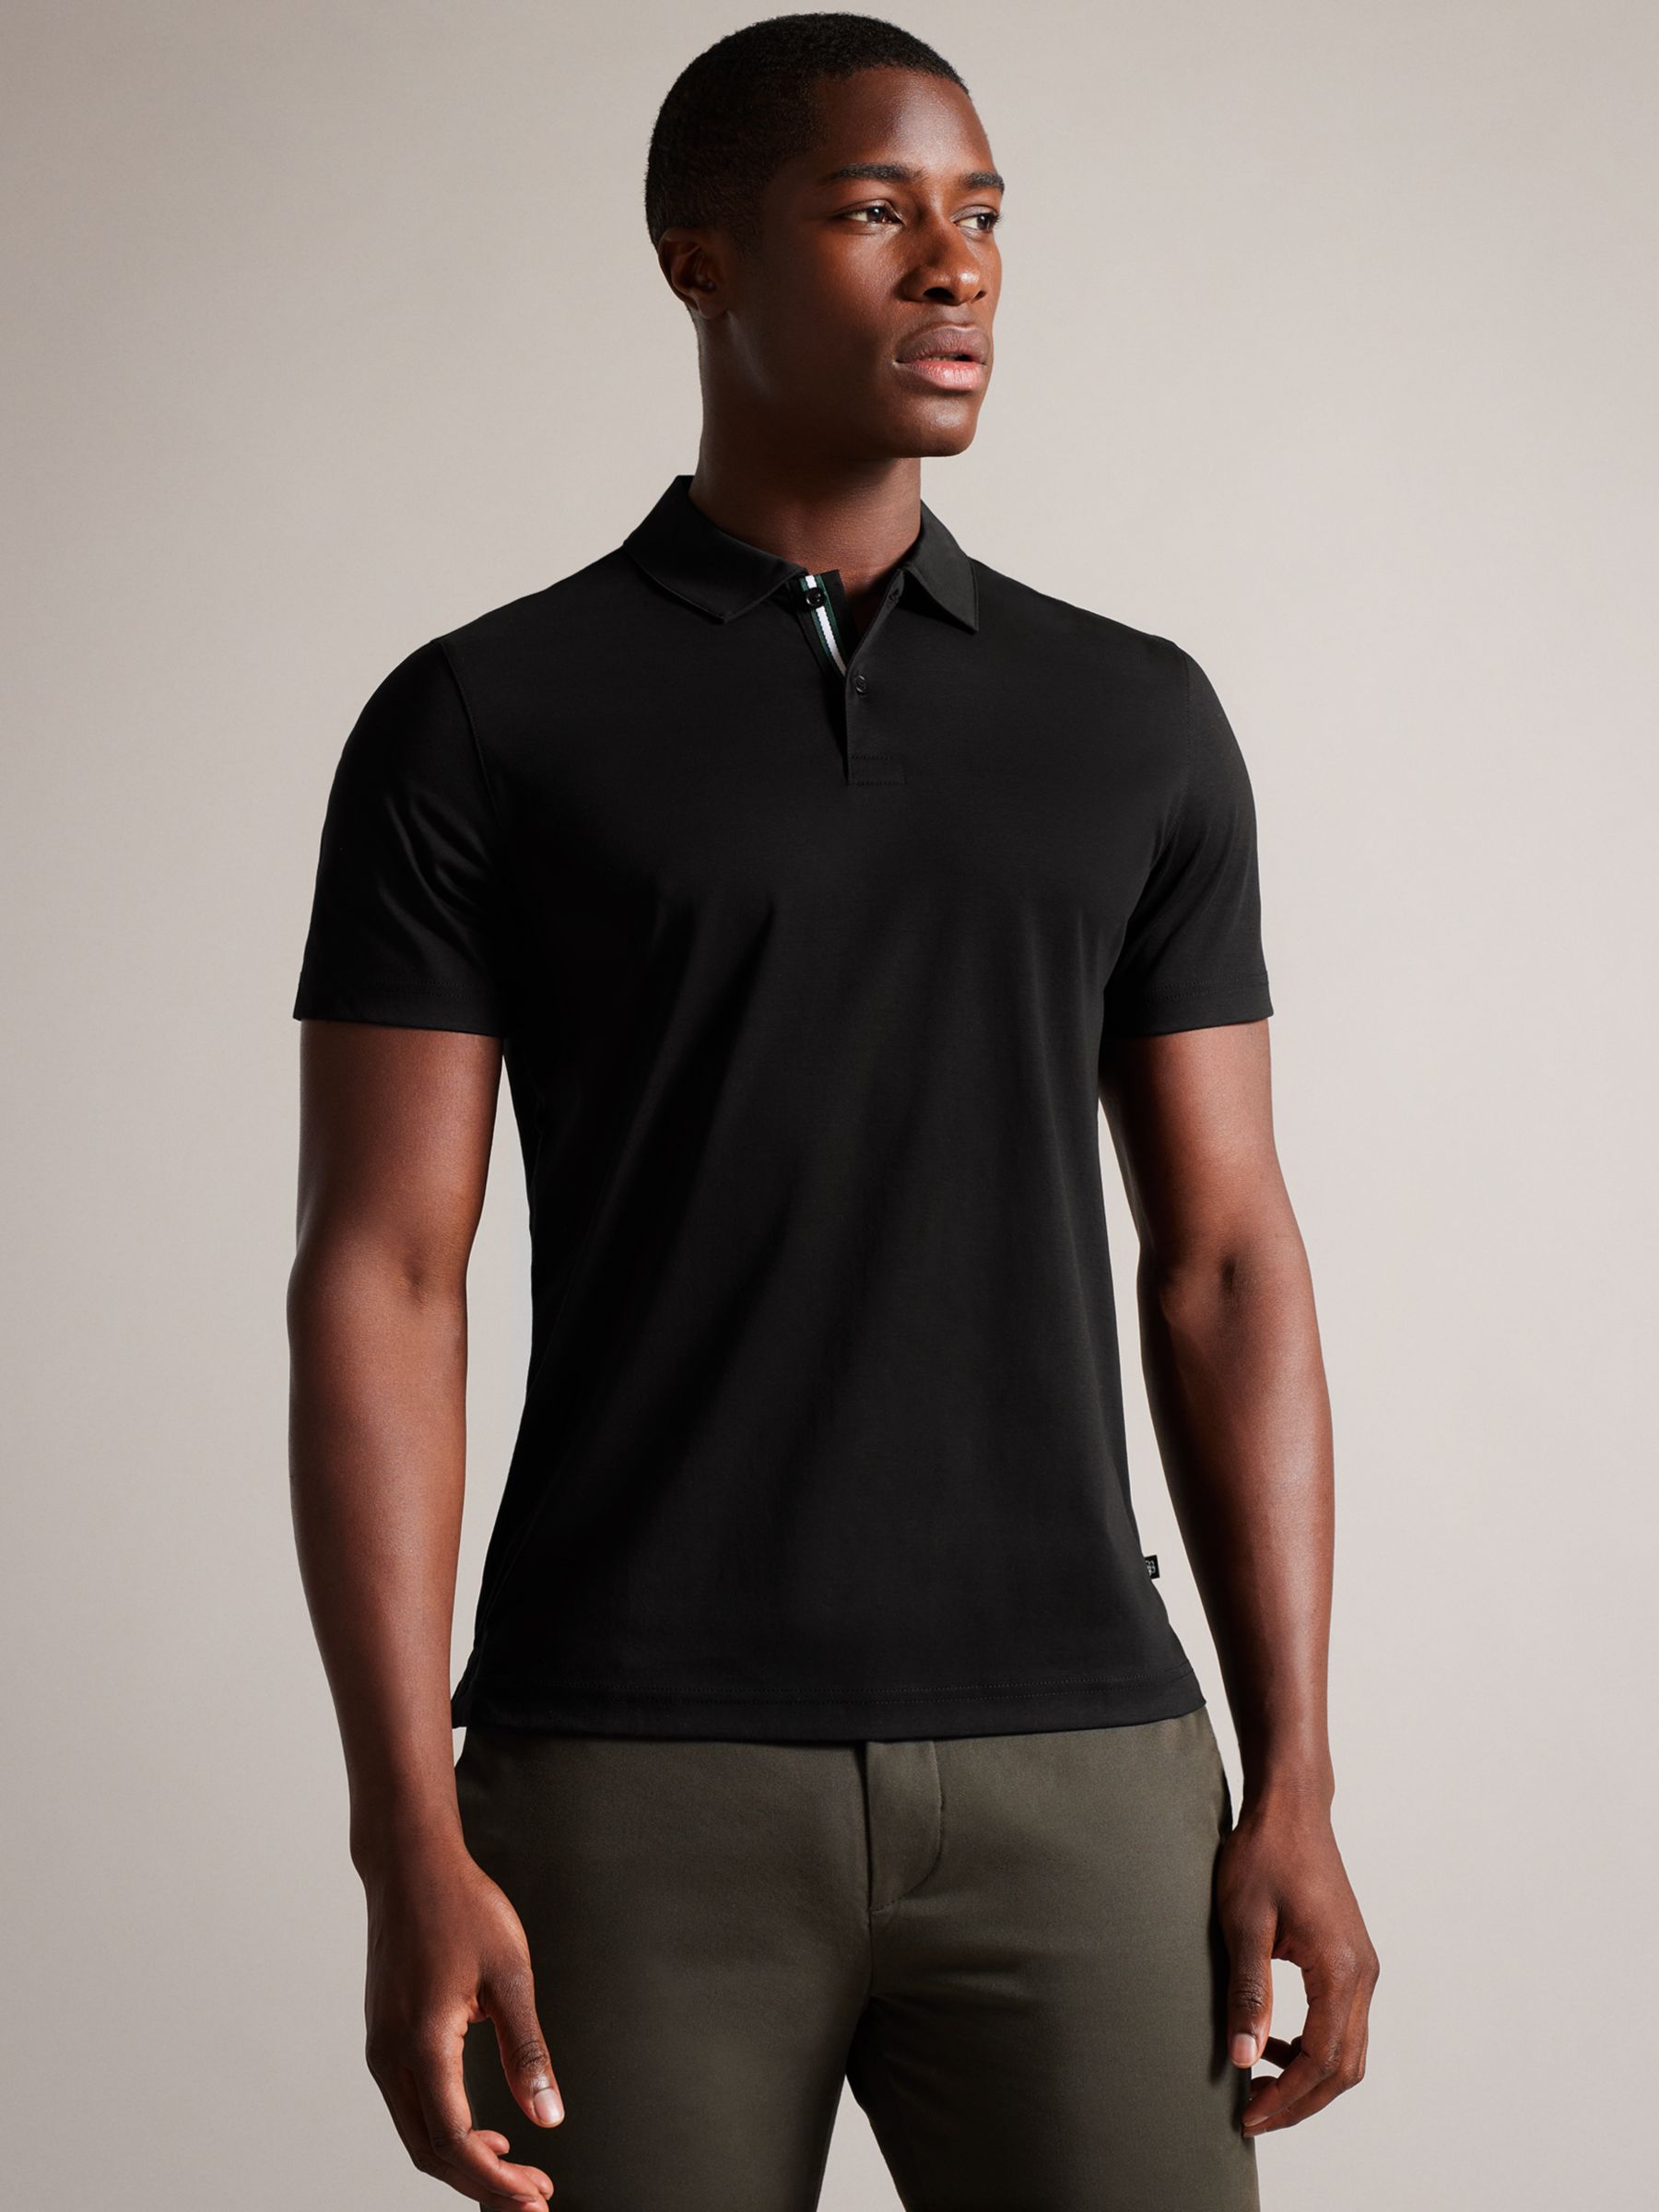 Ted Baker Zeiter Jersey Polo Short Sleeve Shirt, Black, M